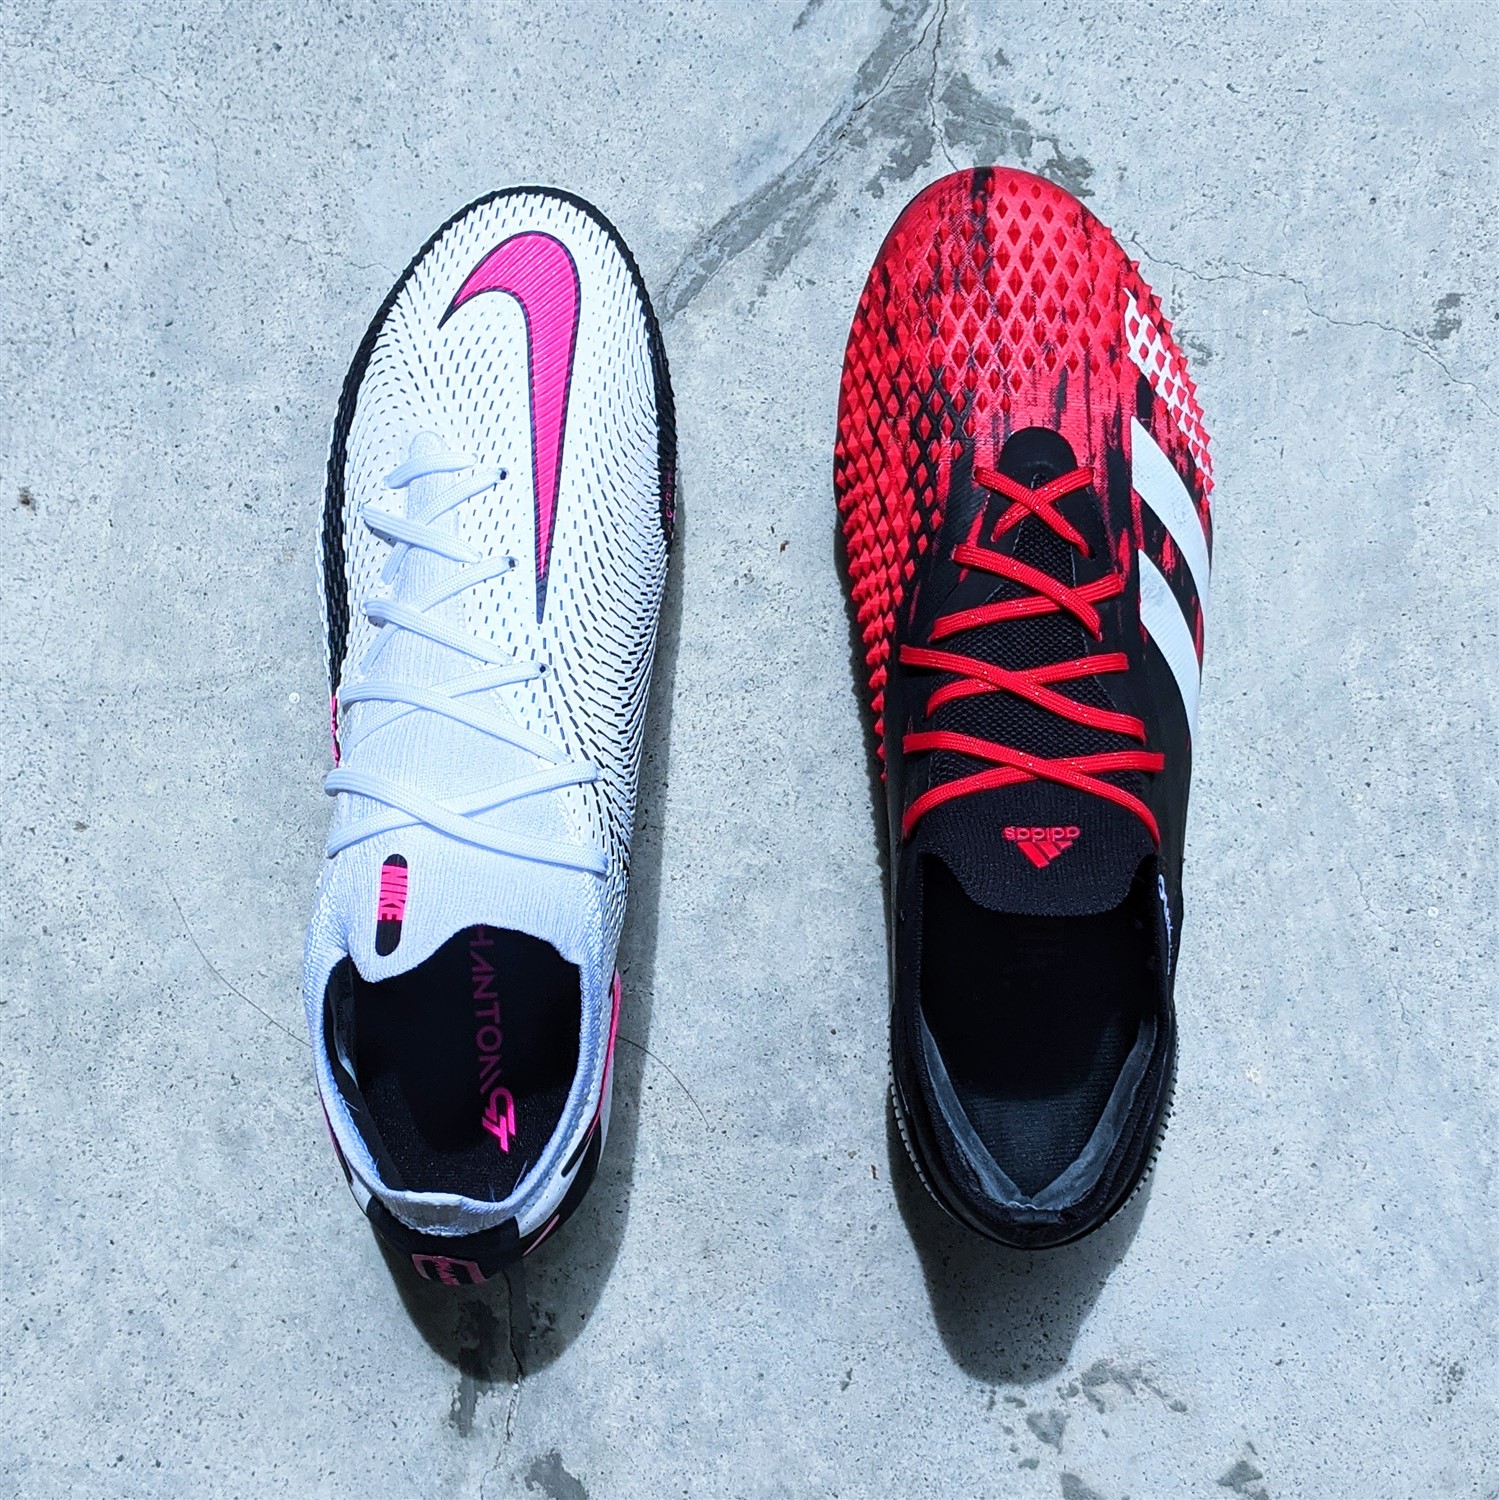 nike adidas football boots size comparison